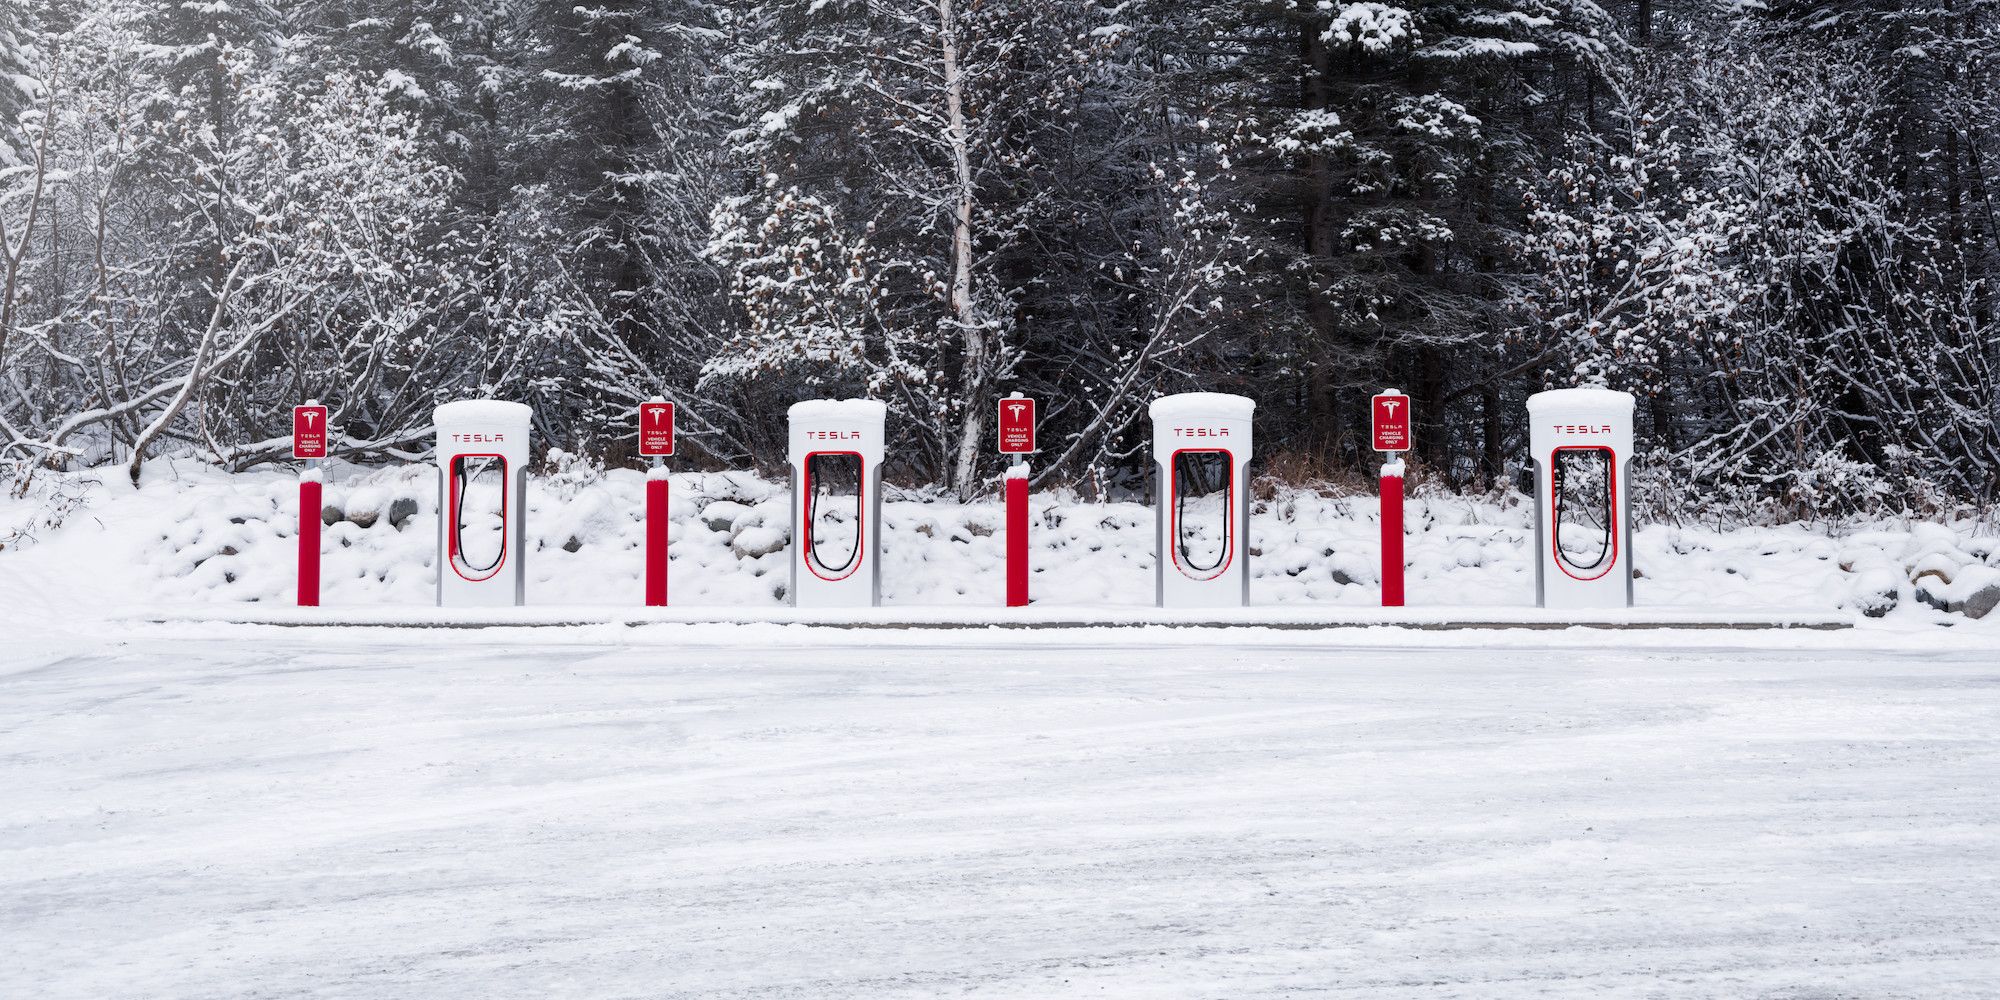 Uma fileira de Tesla Superchargers na neve